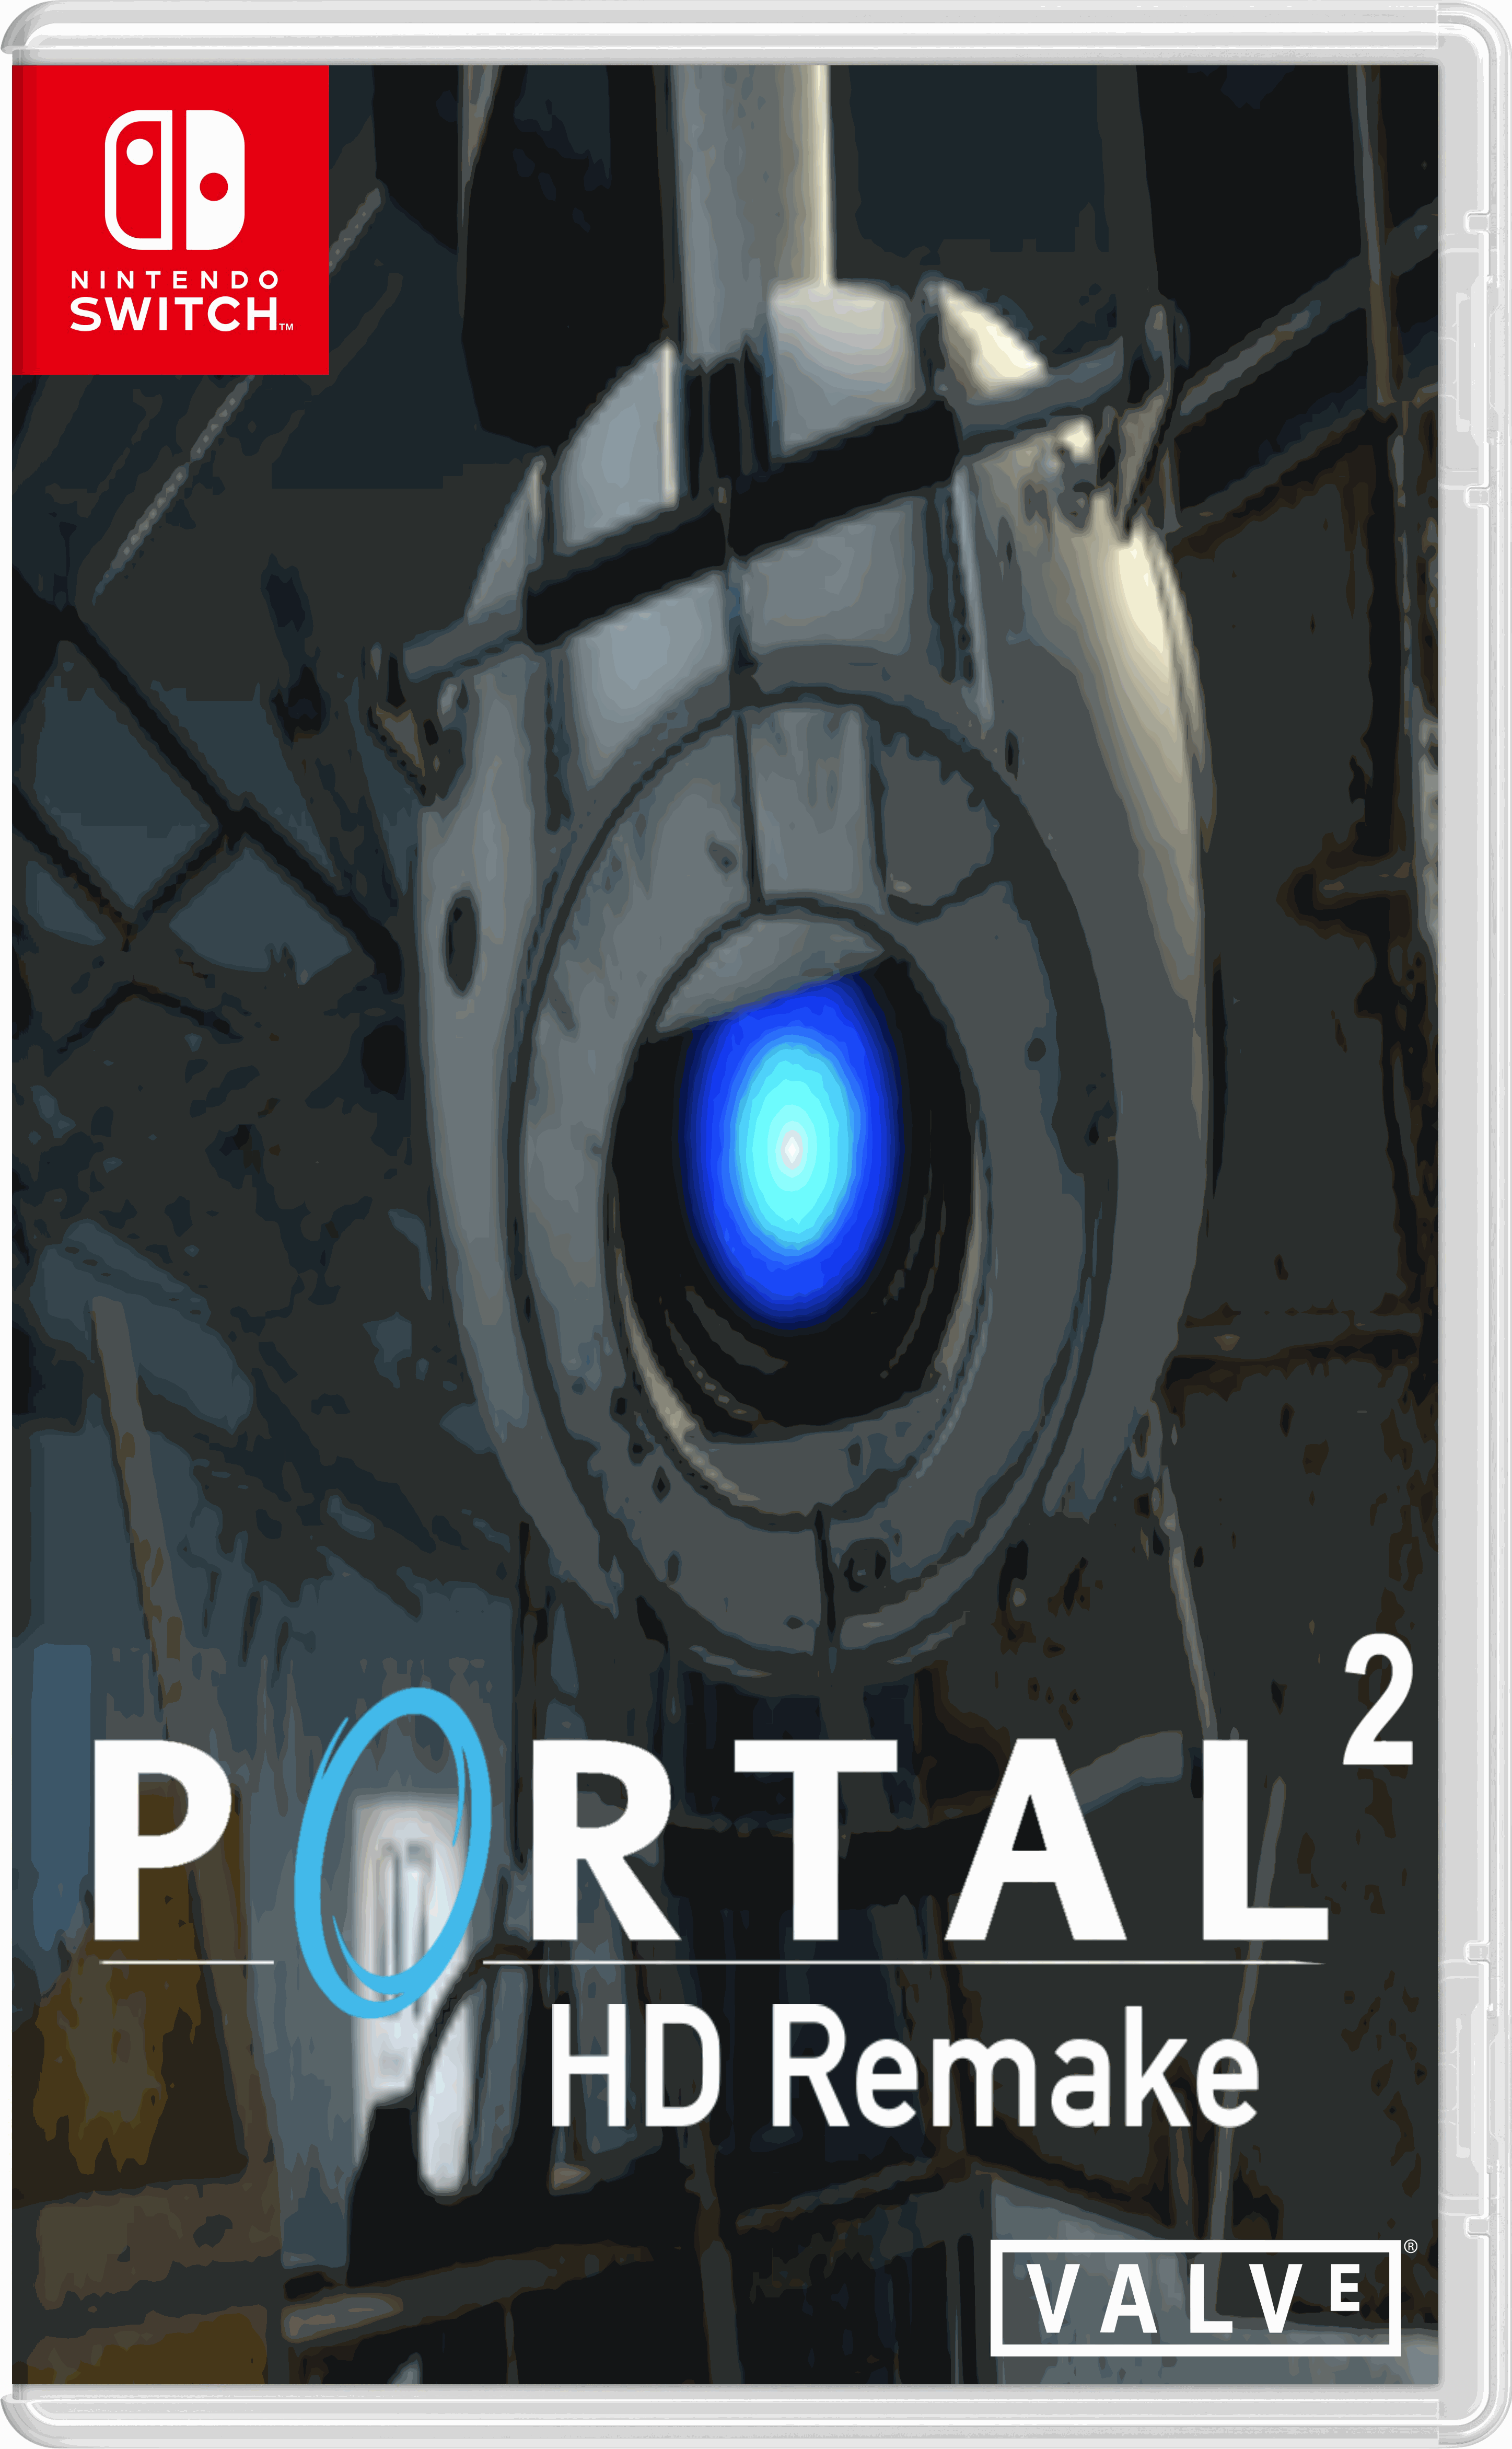 Portal collection